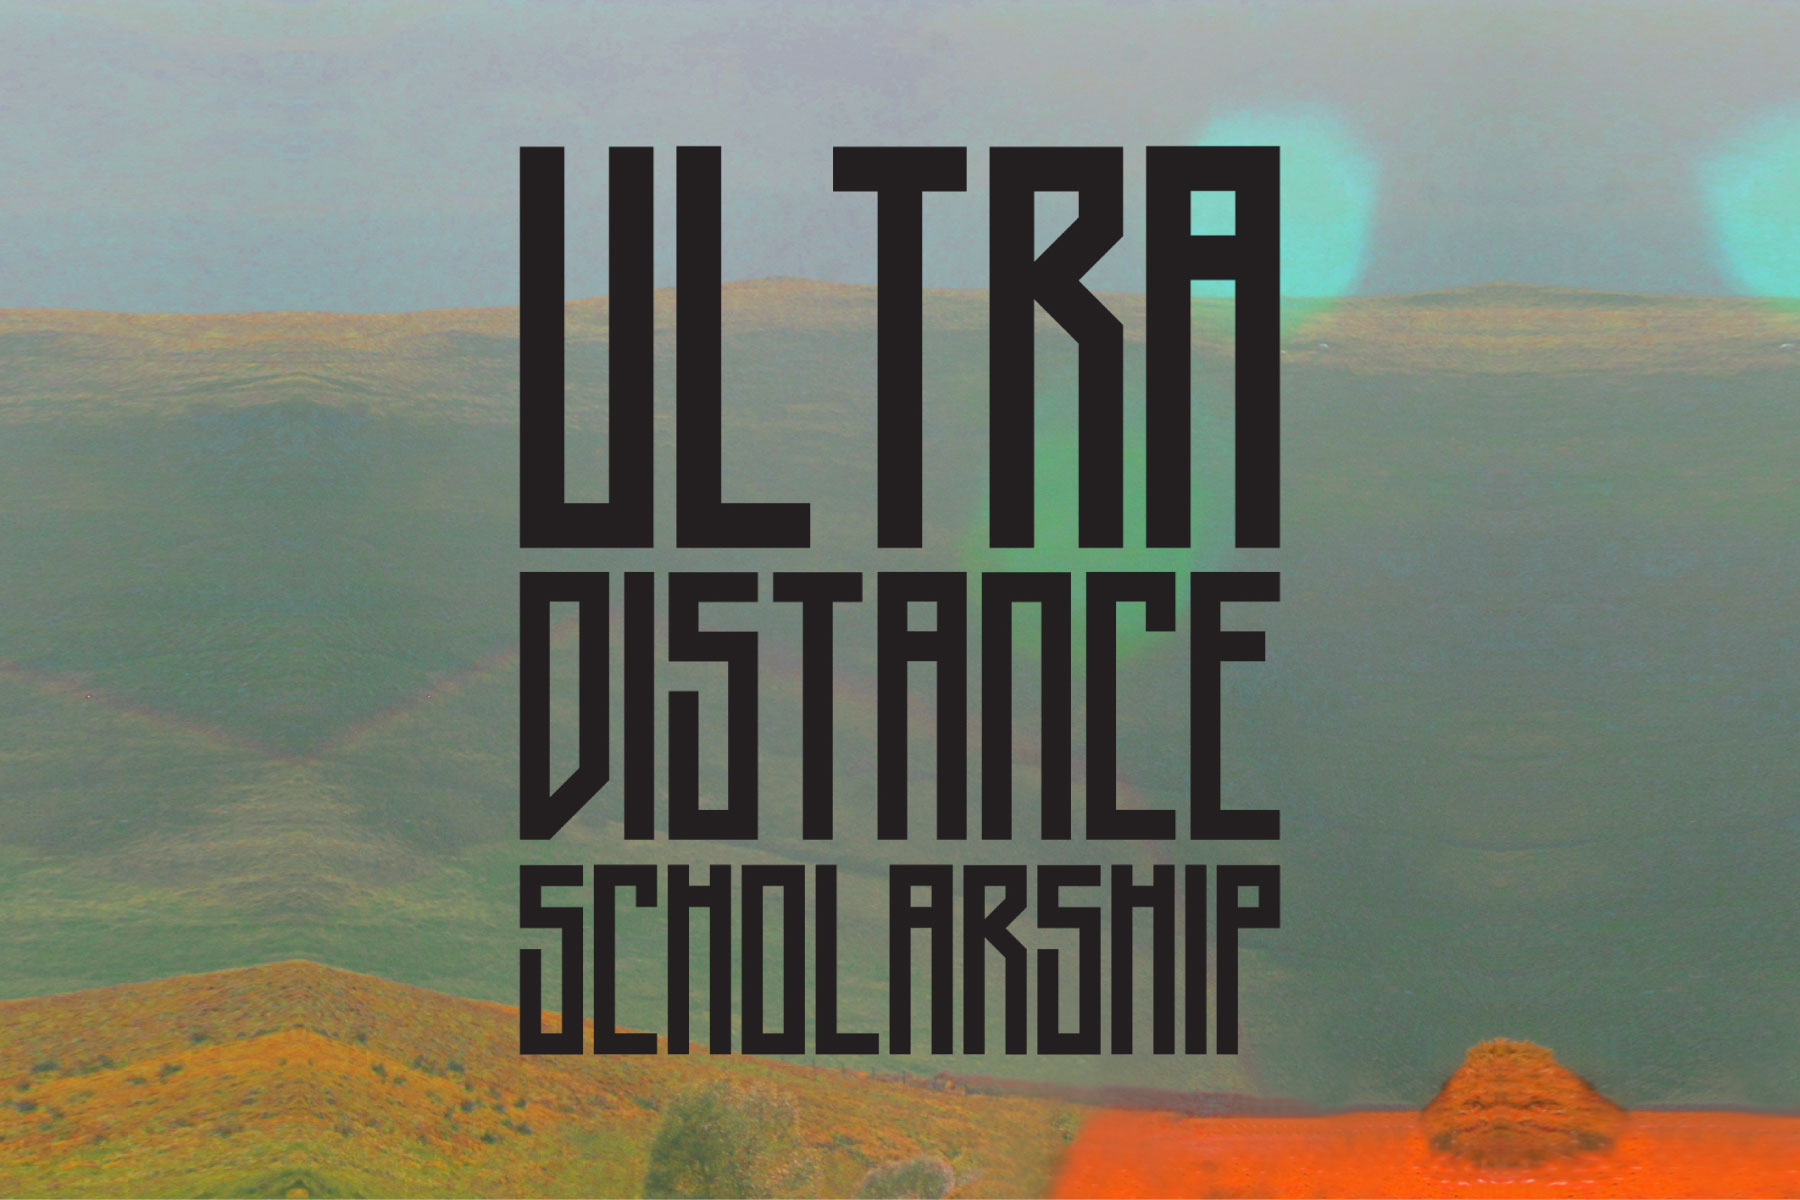 Stayer Ultra Distance Scholarship